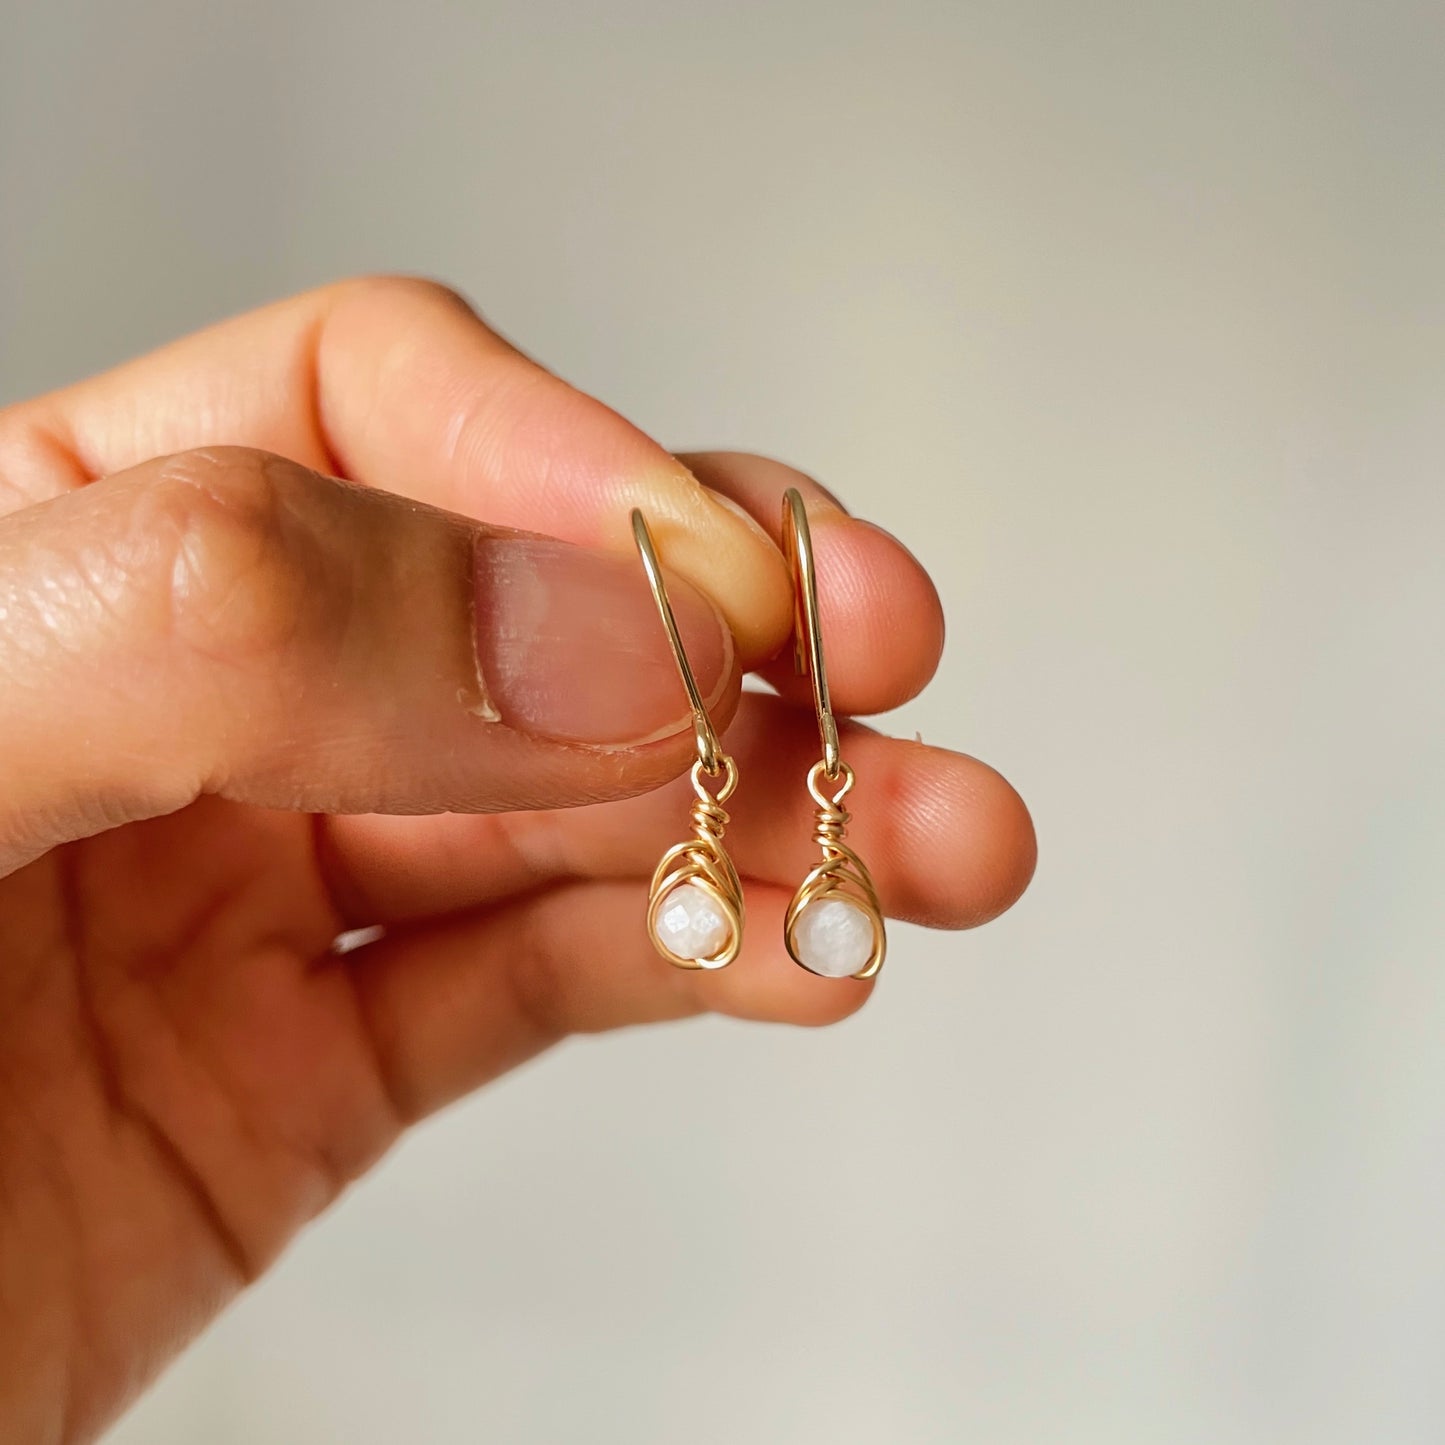 Birthstone Minimal Earrings - Gold Filled